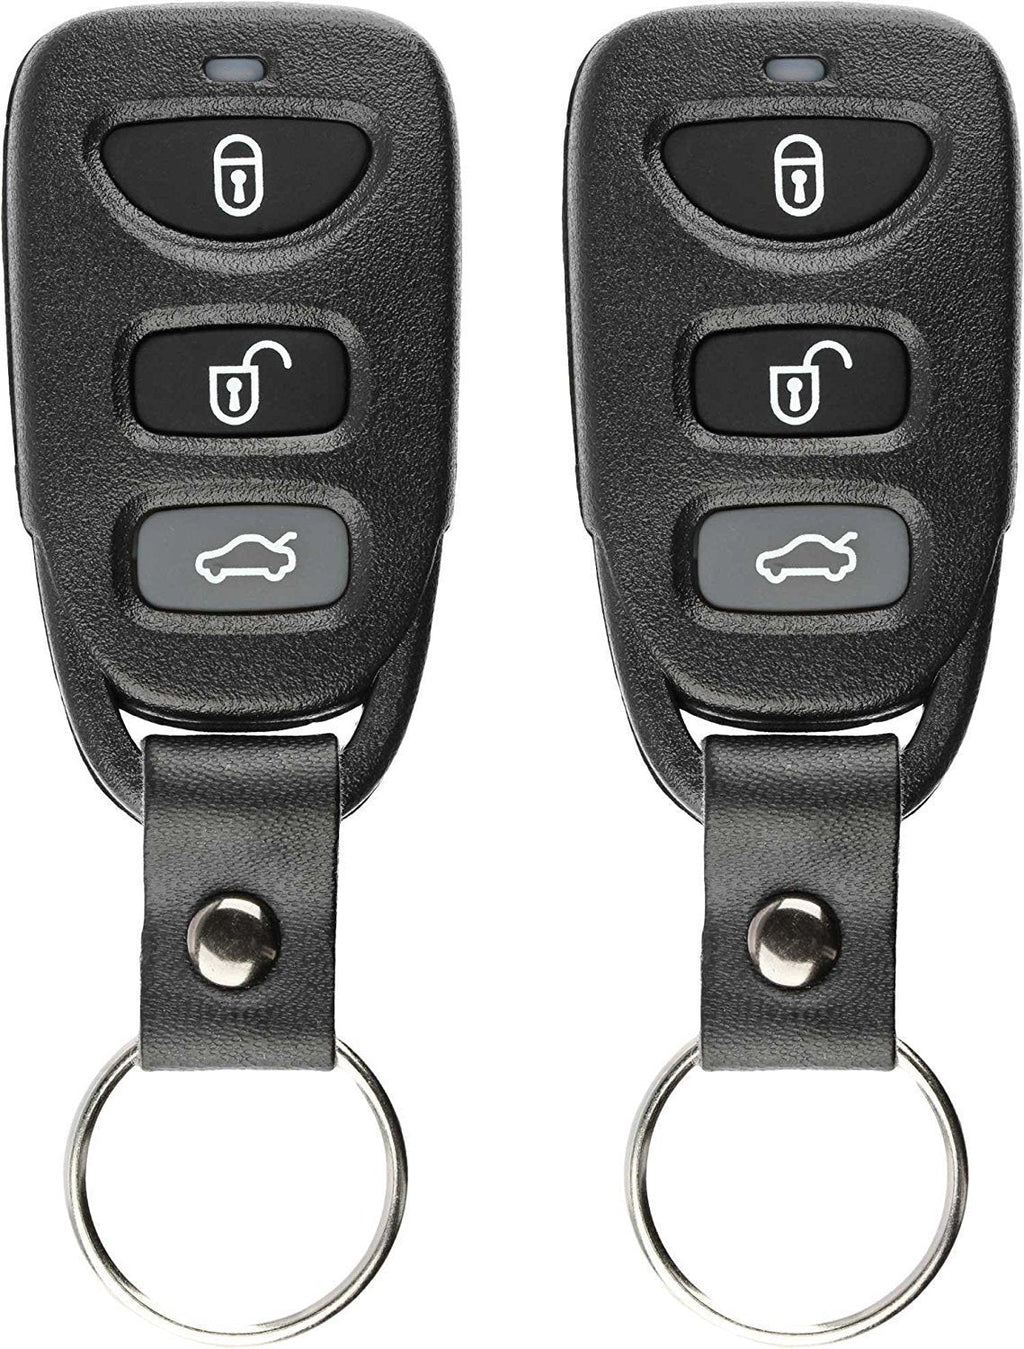  [AUSTRALIA] - KeylessOption Keyless Entry Remote Control Car Key Fob Replacement for Elantra OSLOKA-360T (Pack of 2)